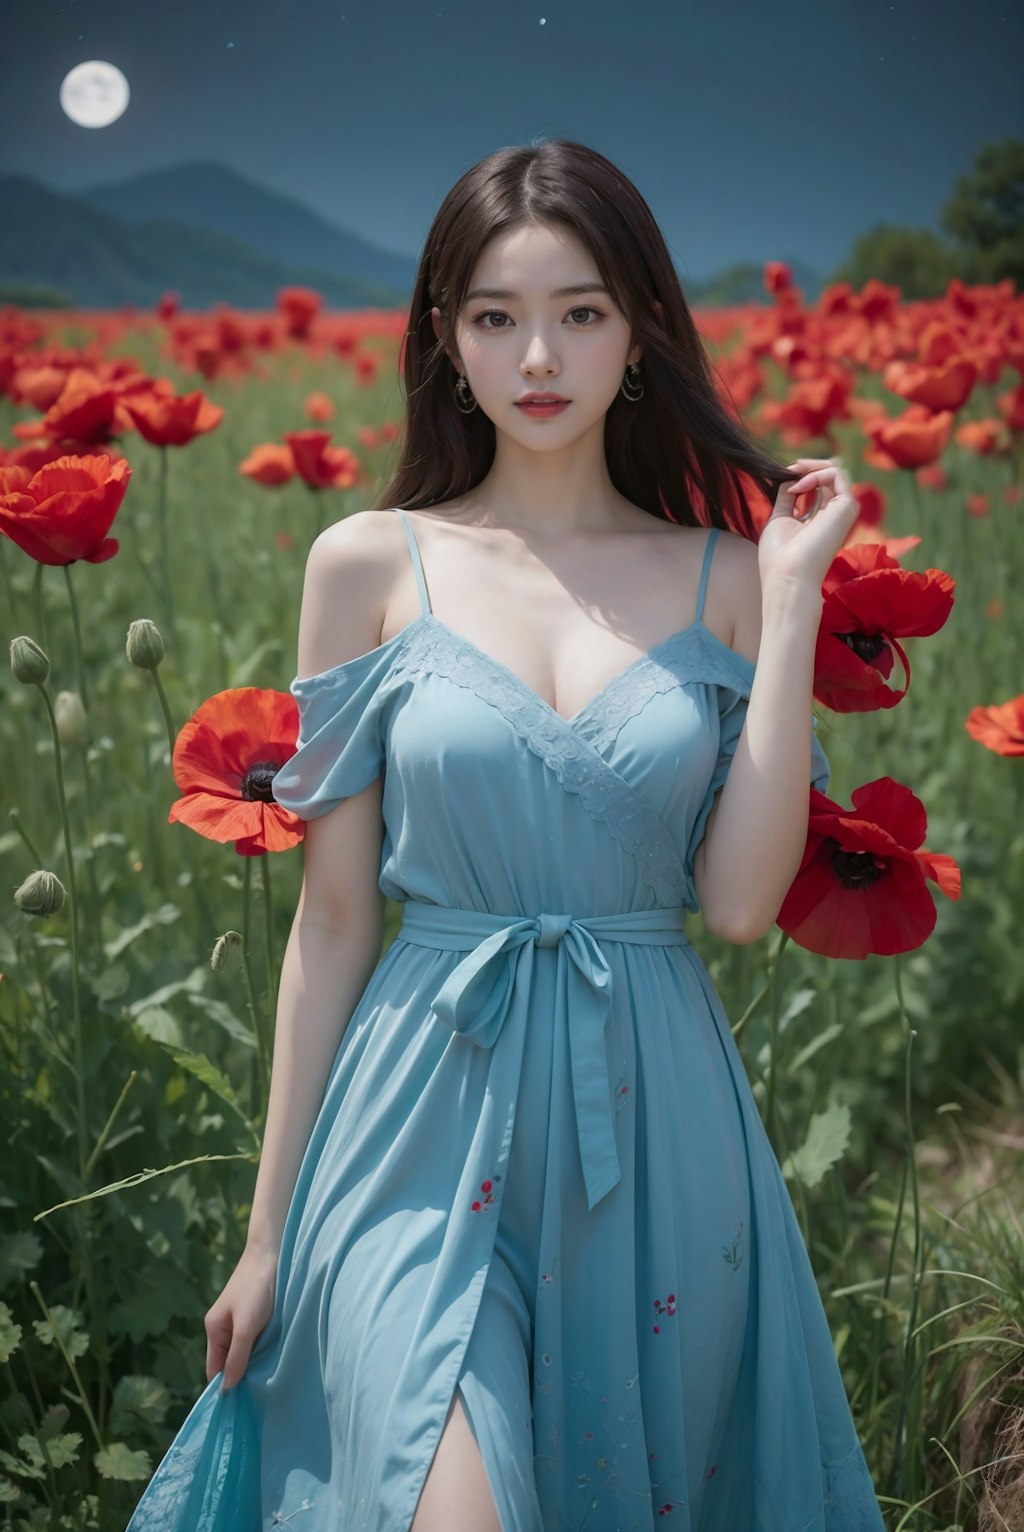 [4K AI ART] Flowers field dress girl